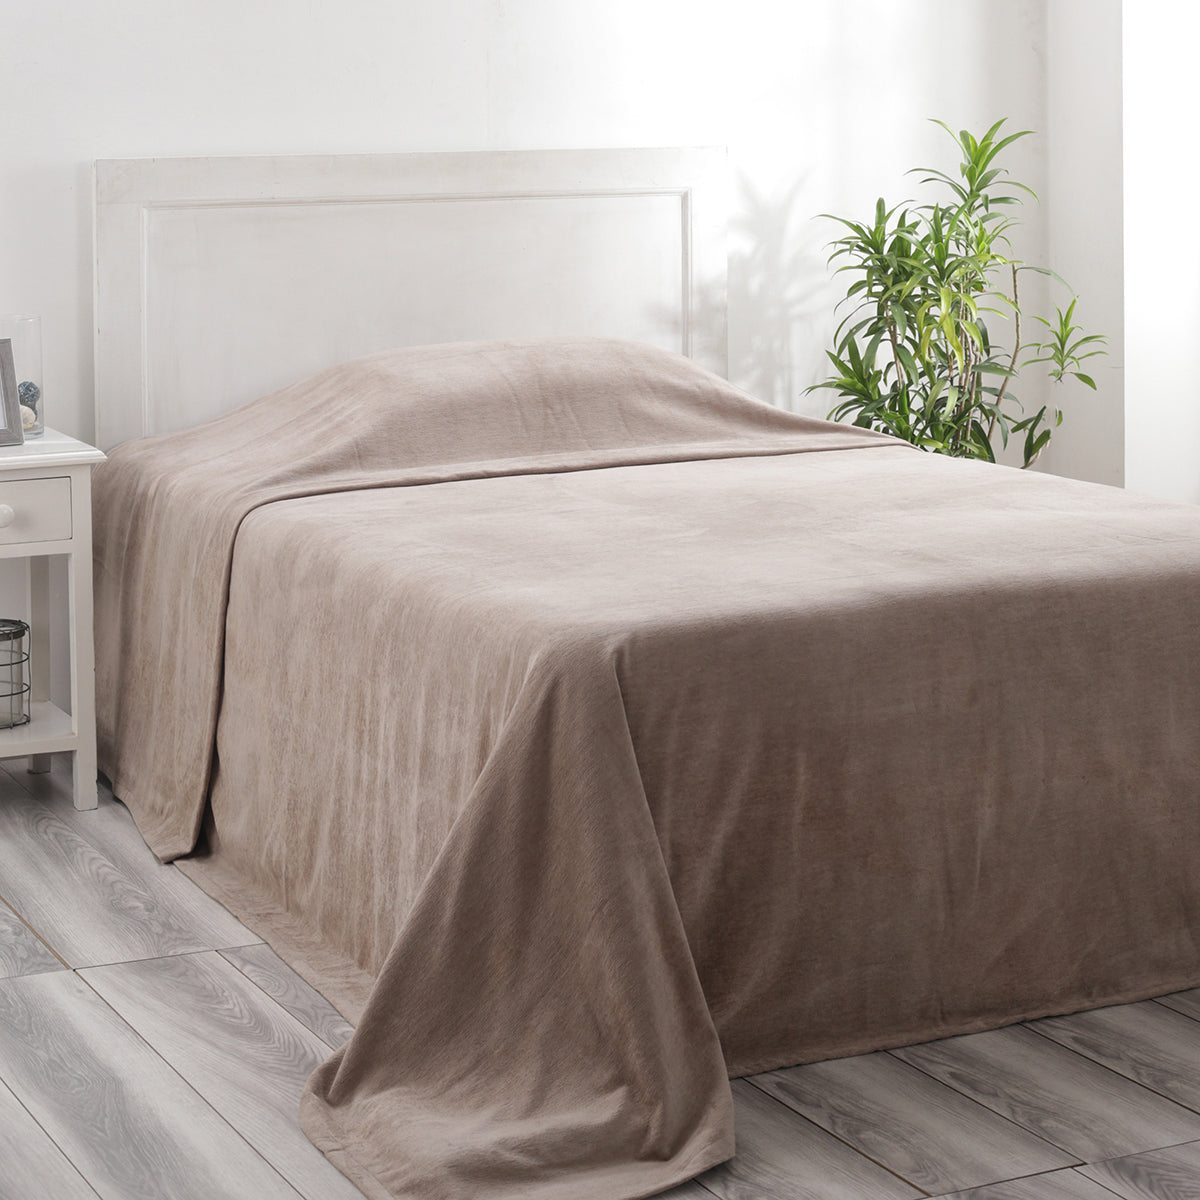 Jessica 100% Cotton Solid Woven Super Soft Ecru Bed Cover/Blanket